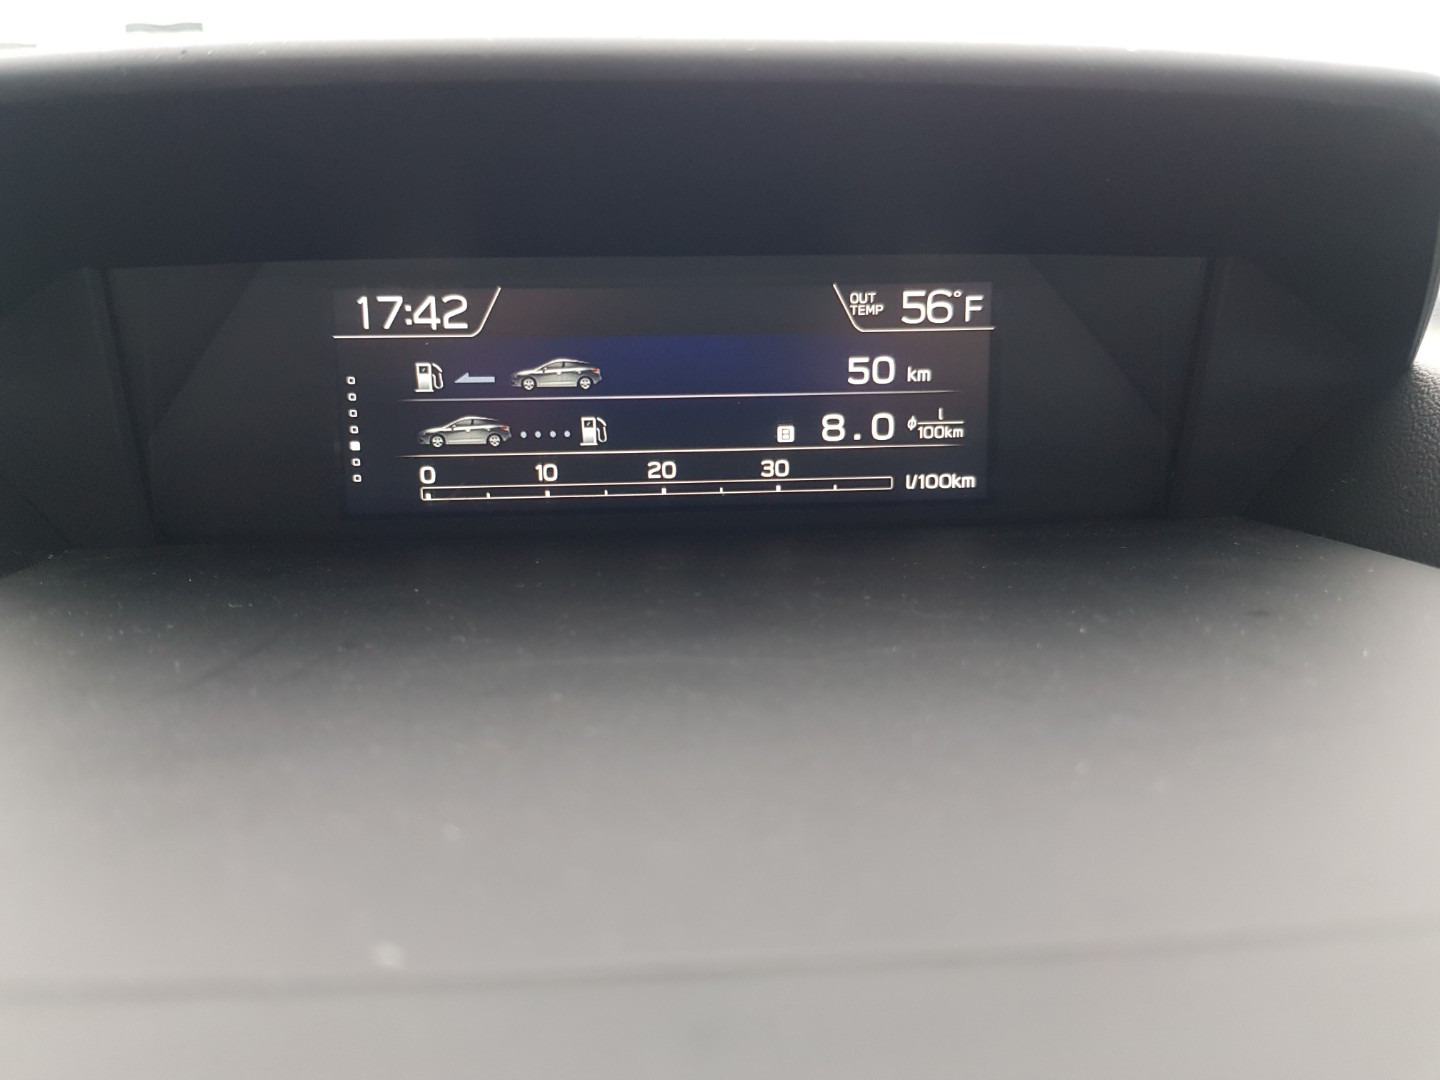 Subaru Impreza, 2019 г.в., пробег 28 533 км, цена, фото, Мурманск